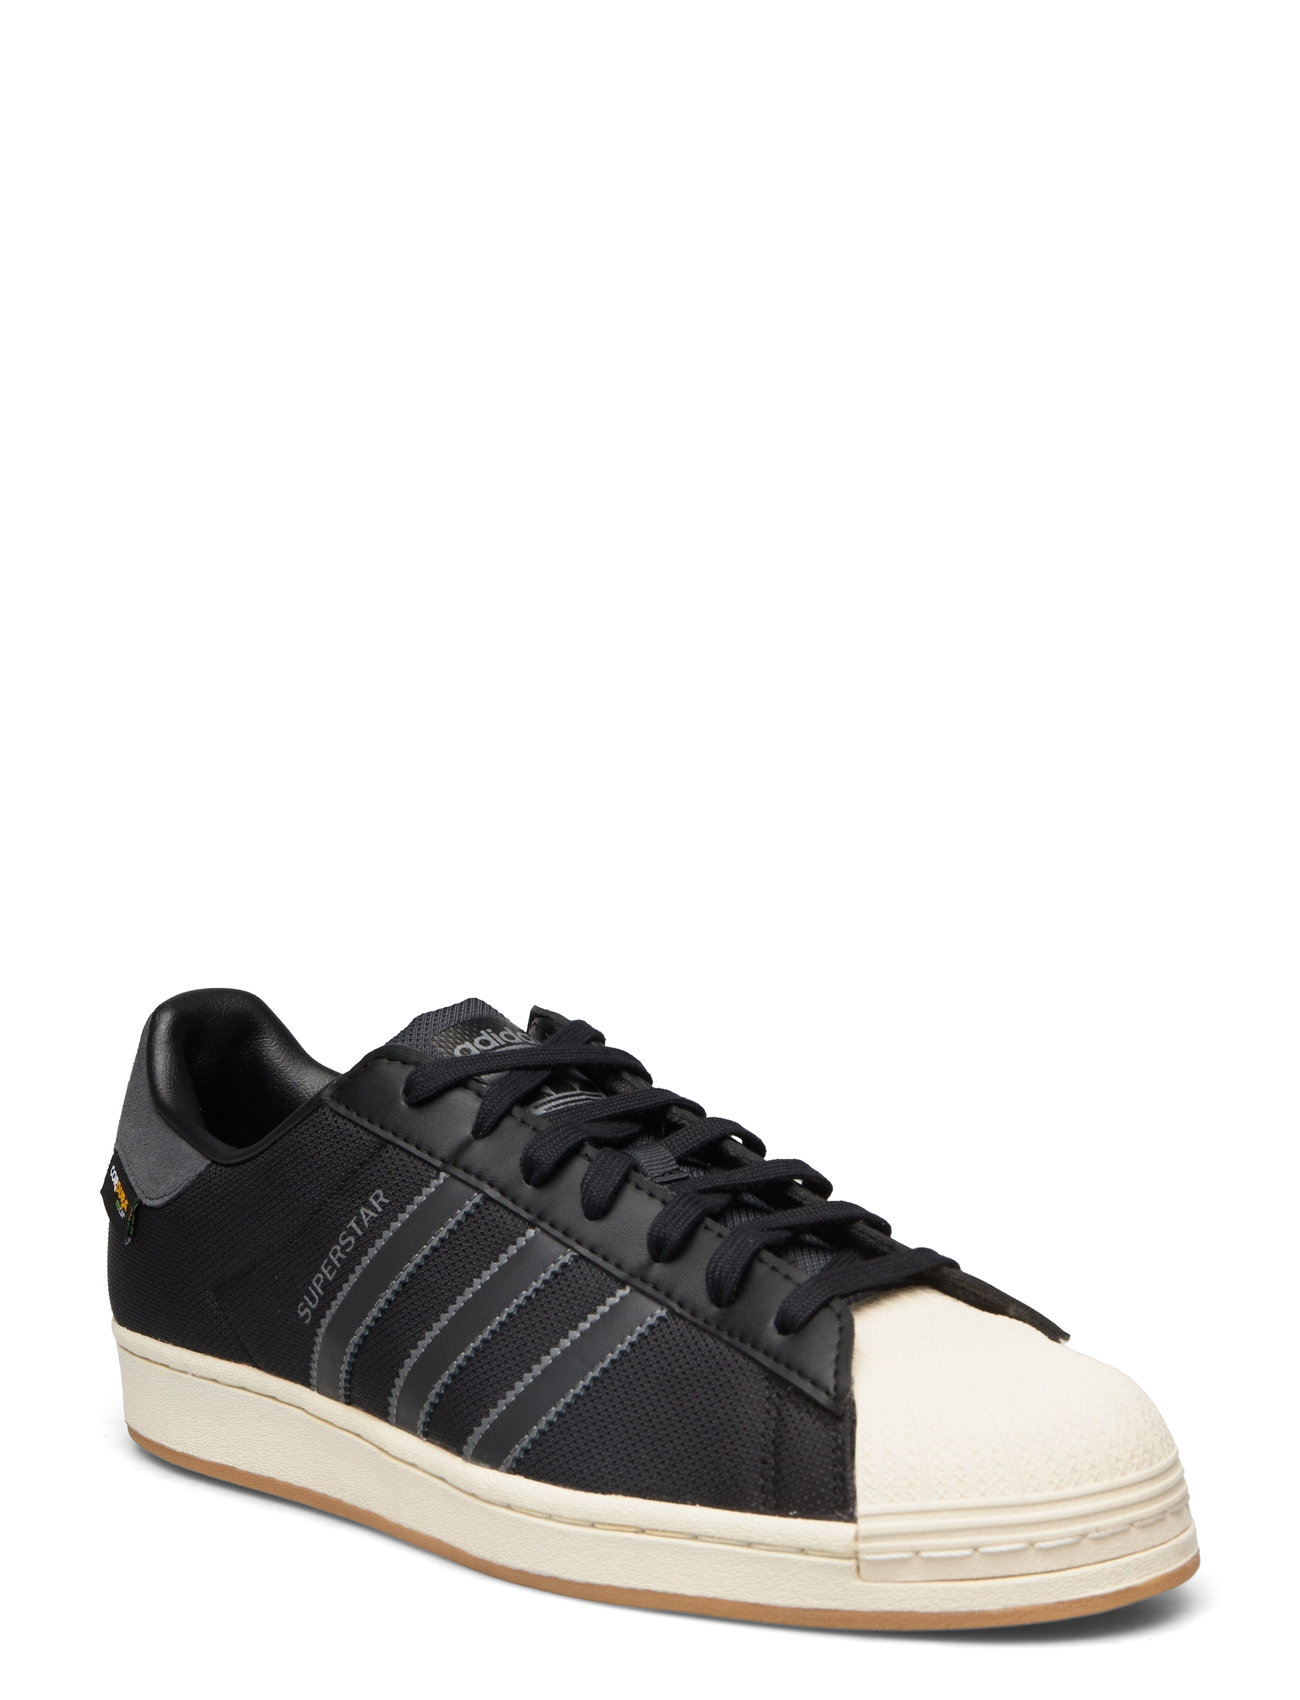 "adidas Originals" "Superstar Shoes Sport Sneakers Low-top Black Adidas